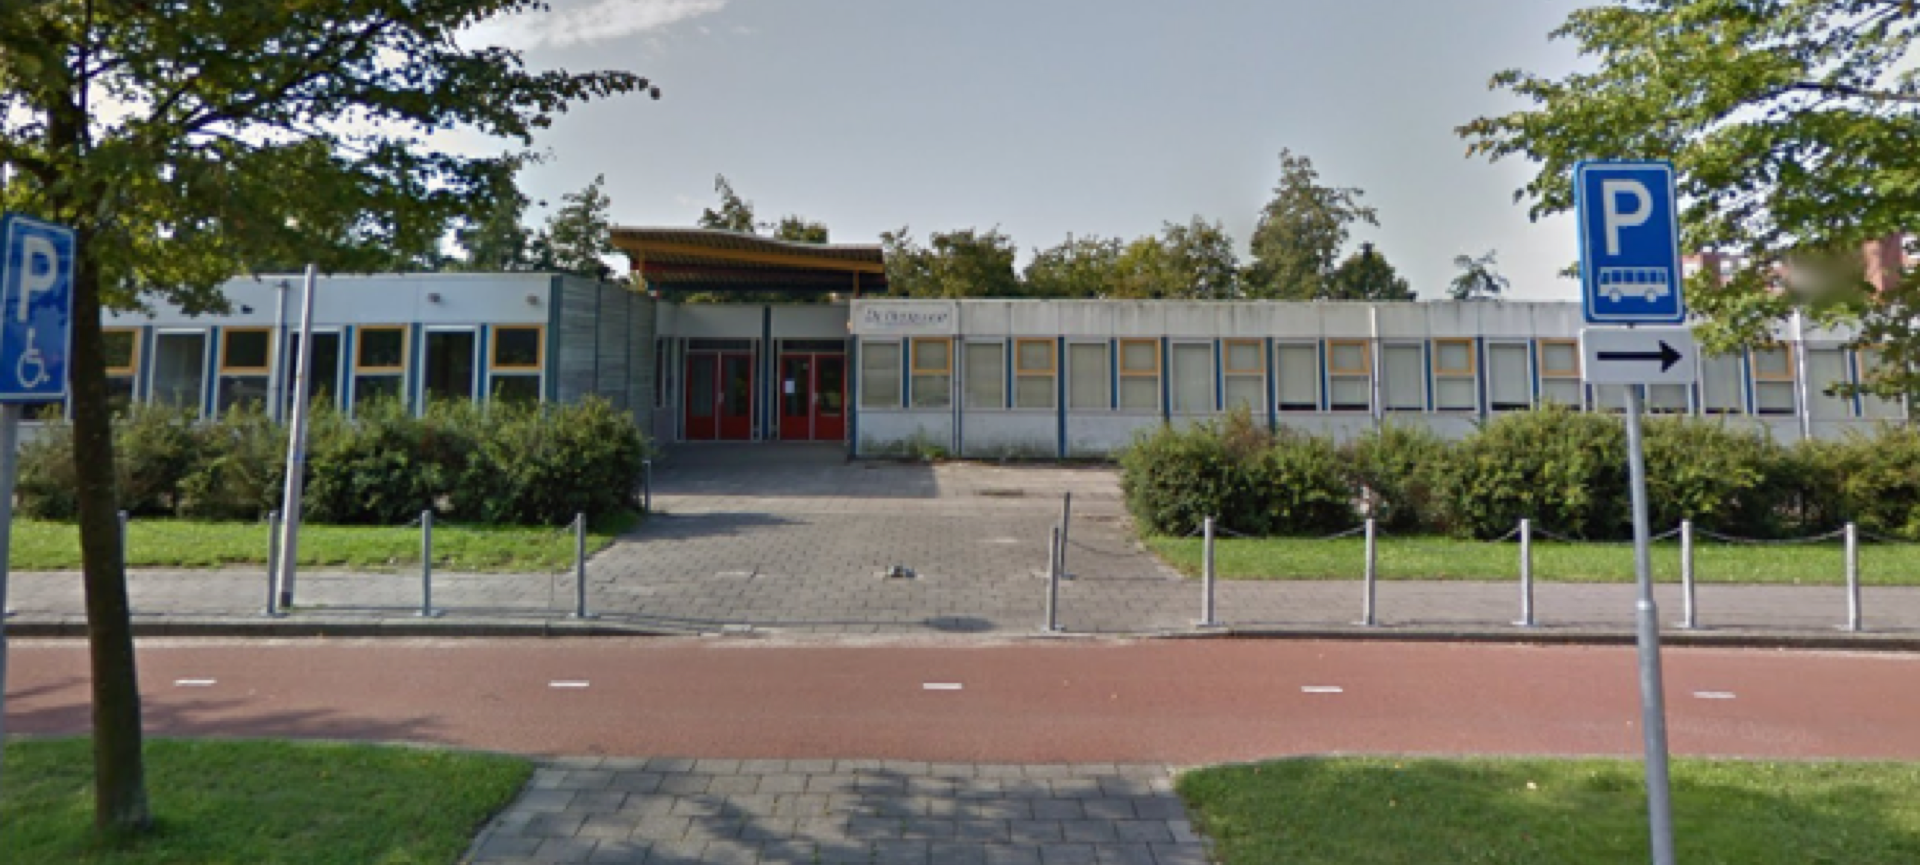 UniKidz Westwijk facilities